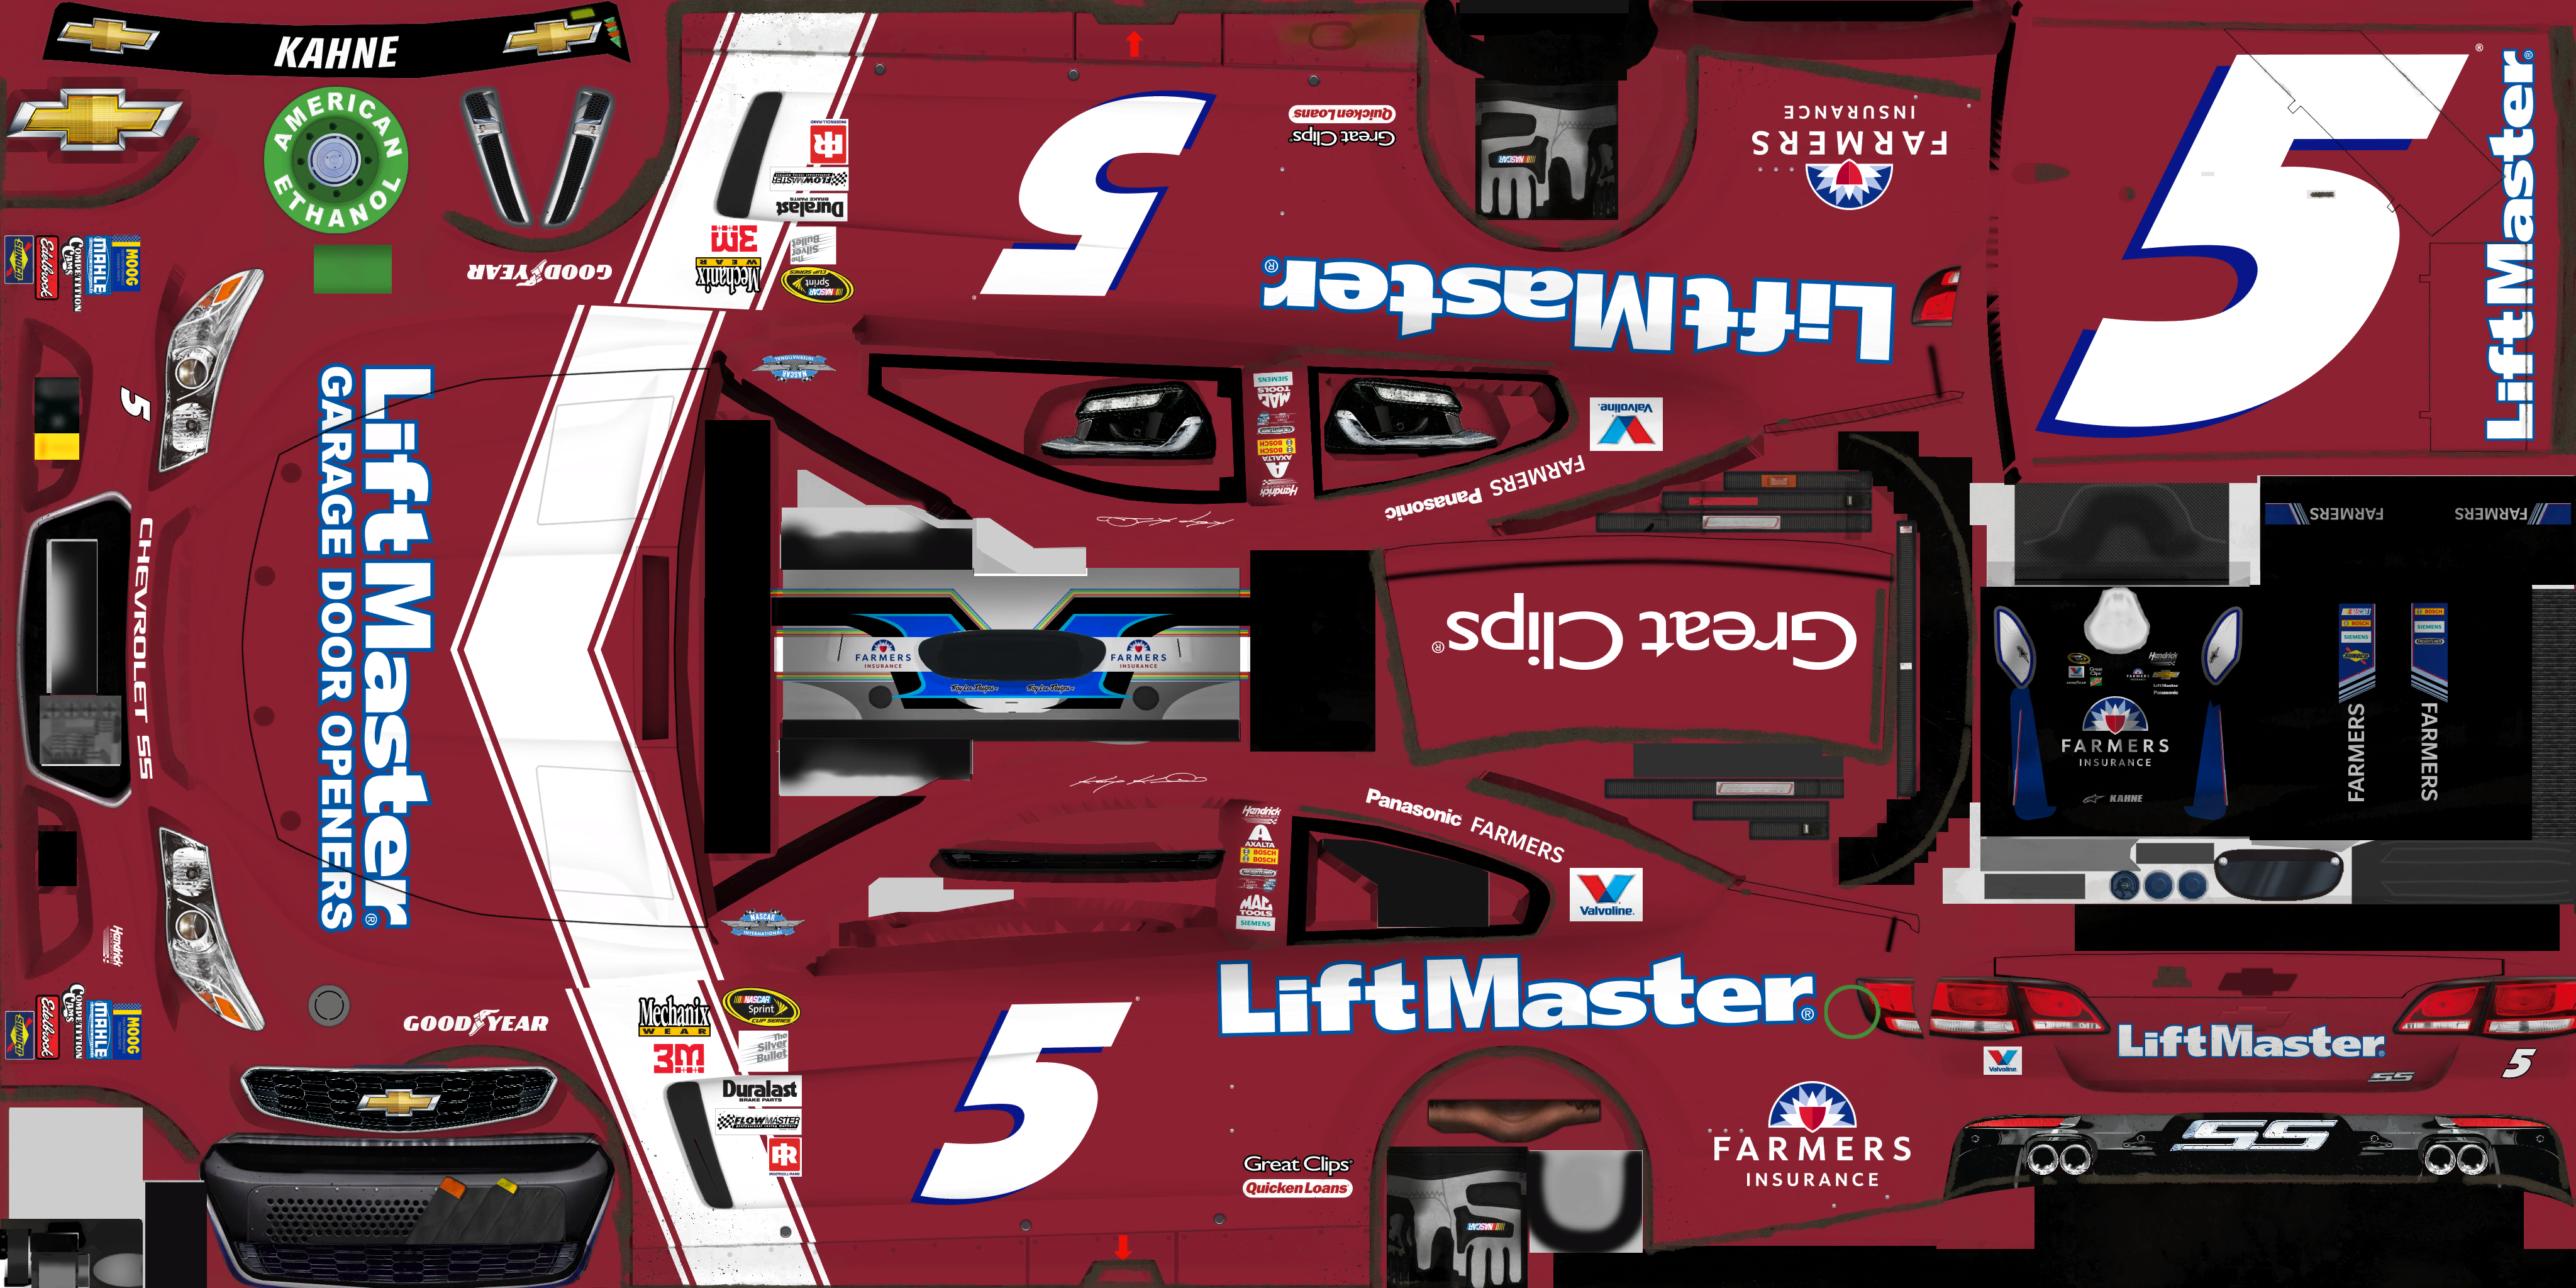 NASCAR Heat Evolution - #5 Kasey Kahne (LiftMaster Throwback)